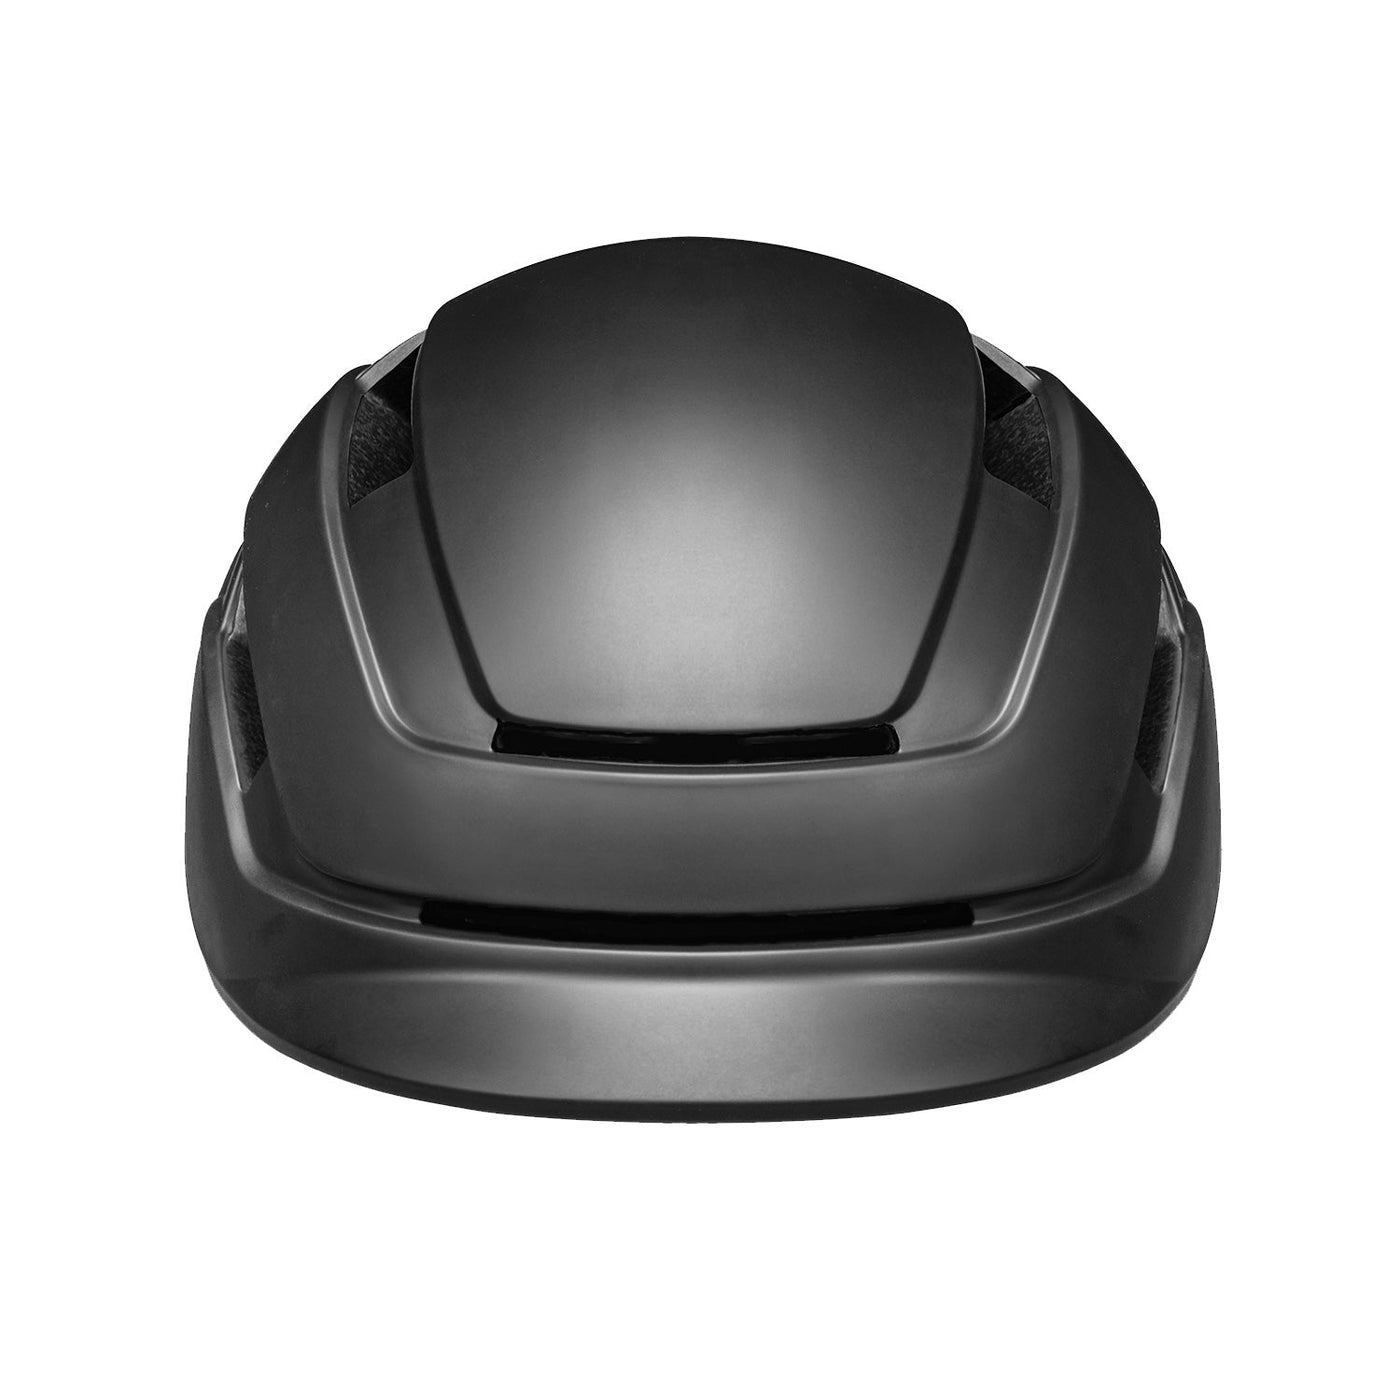 KQi3 Kickscooter Helmet